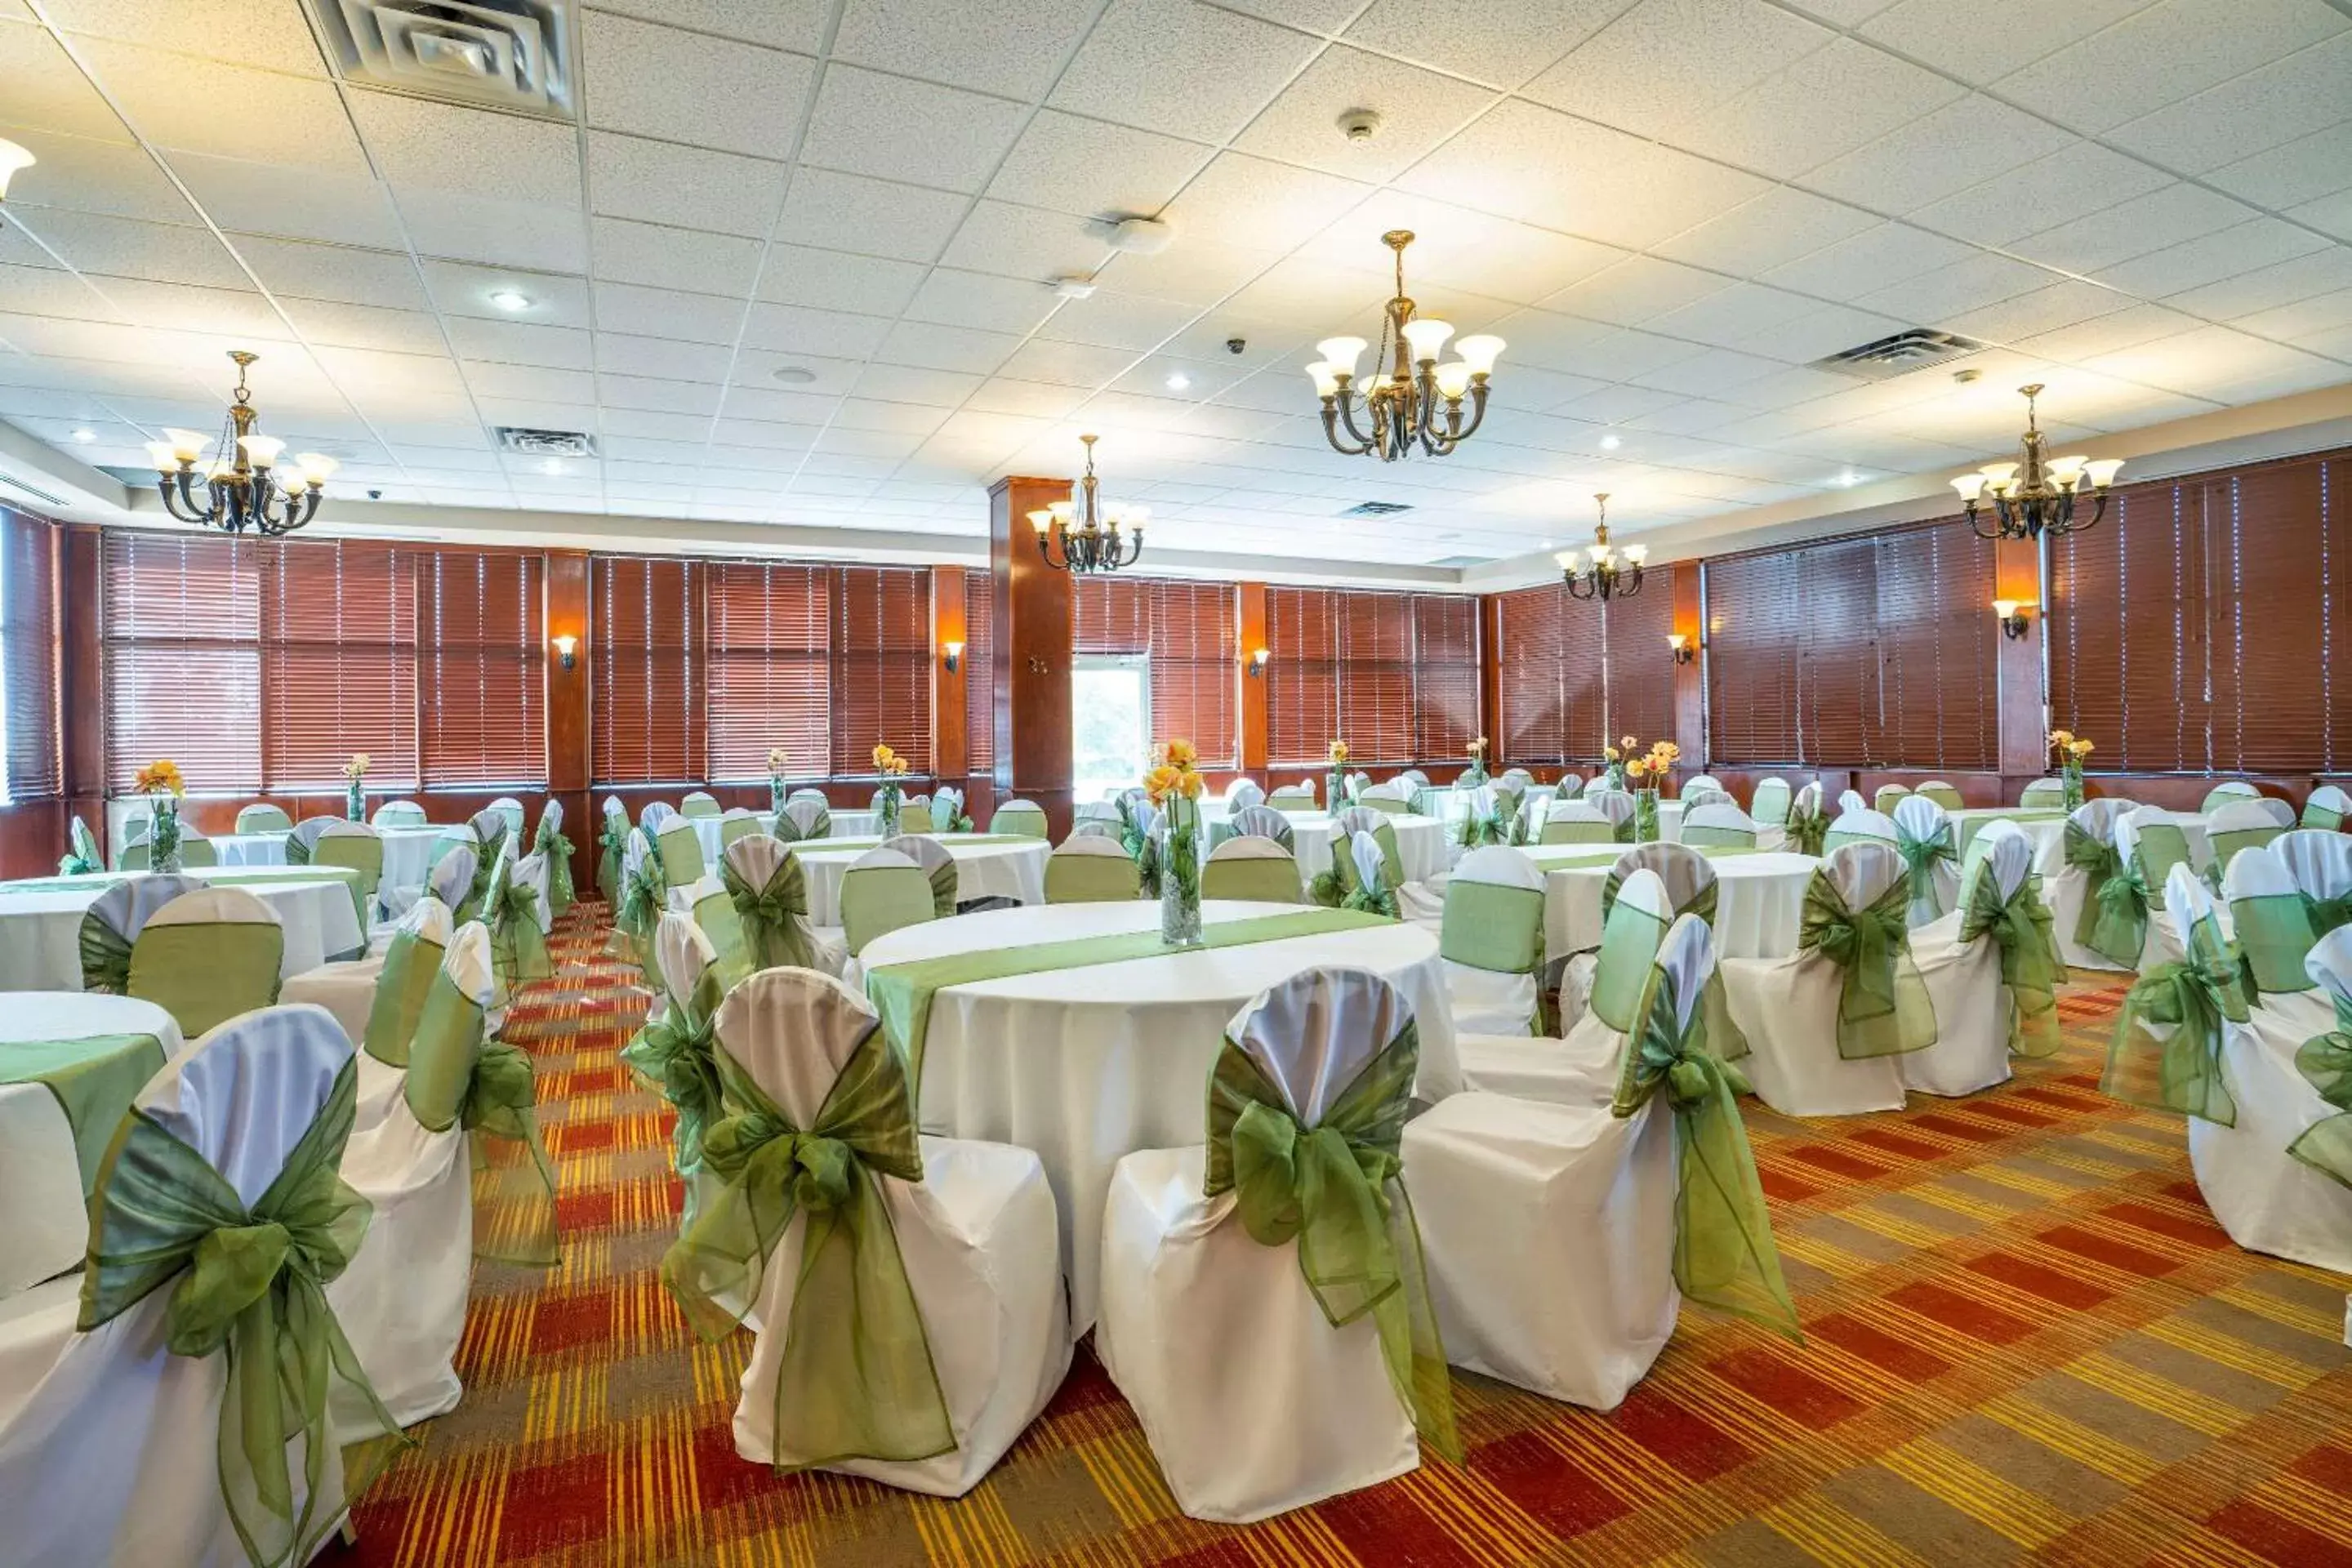 Meeting/conference room, Banquet Facilities in Comfort Inn & Suites Surrey